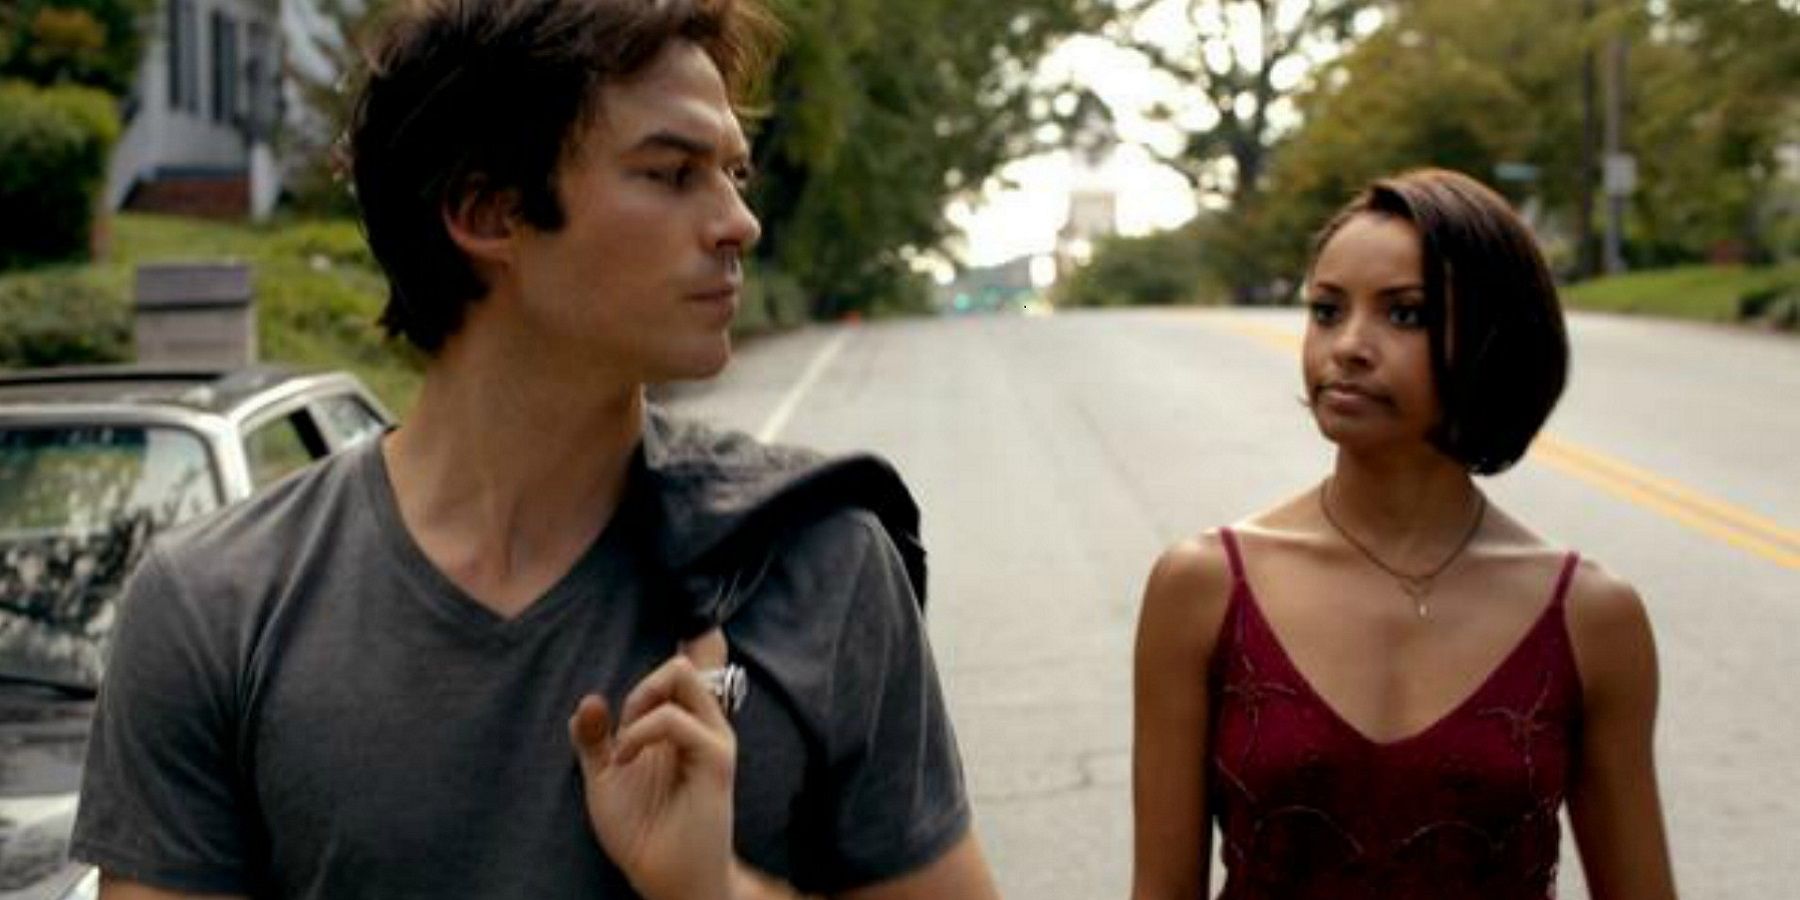 Bonnie e Damon andando na rua em Vampire Diaries.